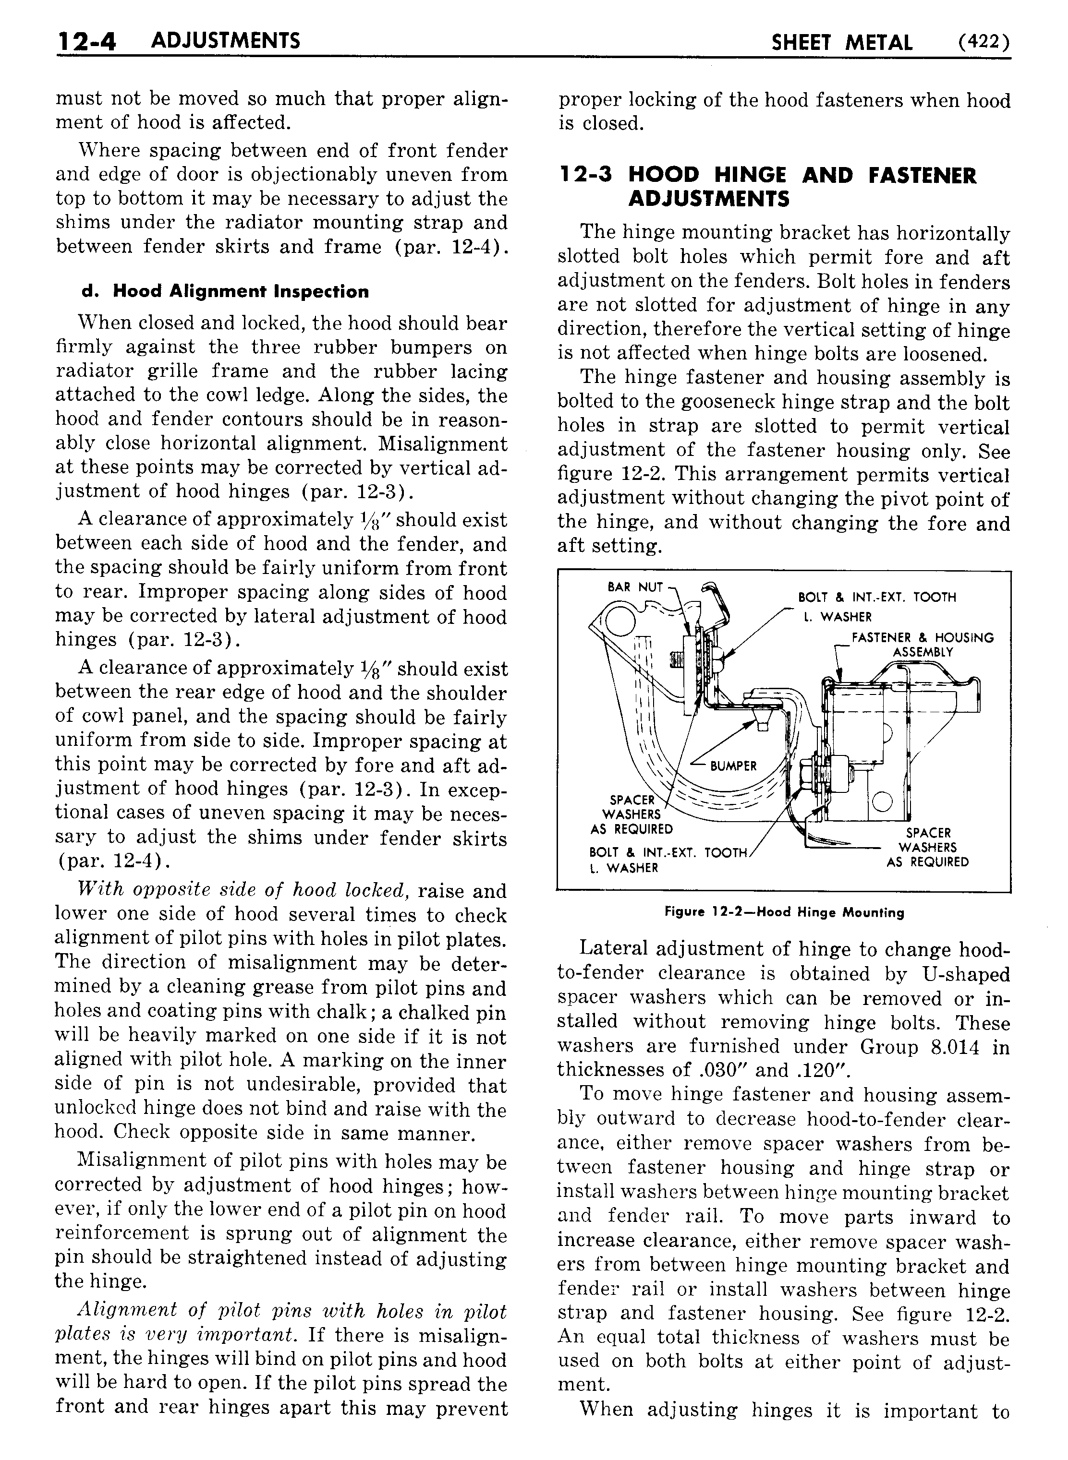 n_13 1951 Buick Shop Manual - Sheet Metal-004-004.jpg